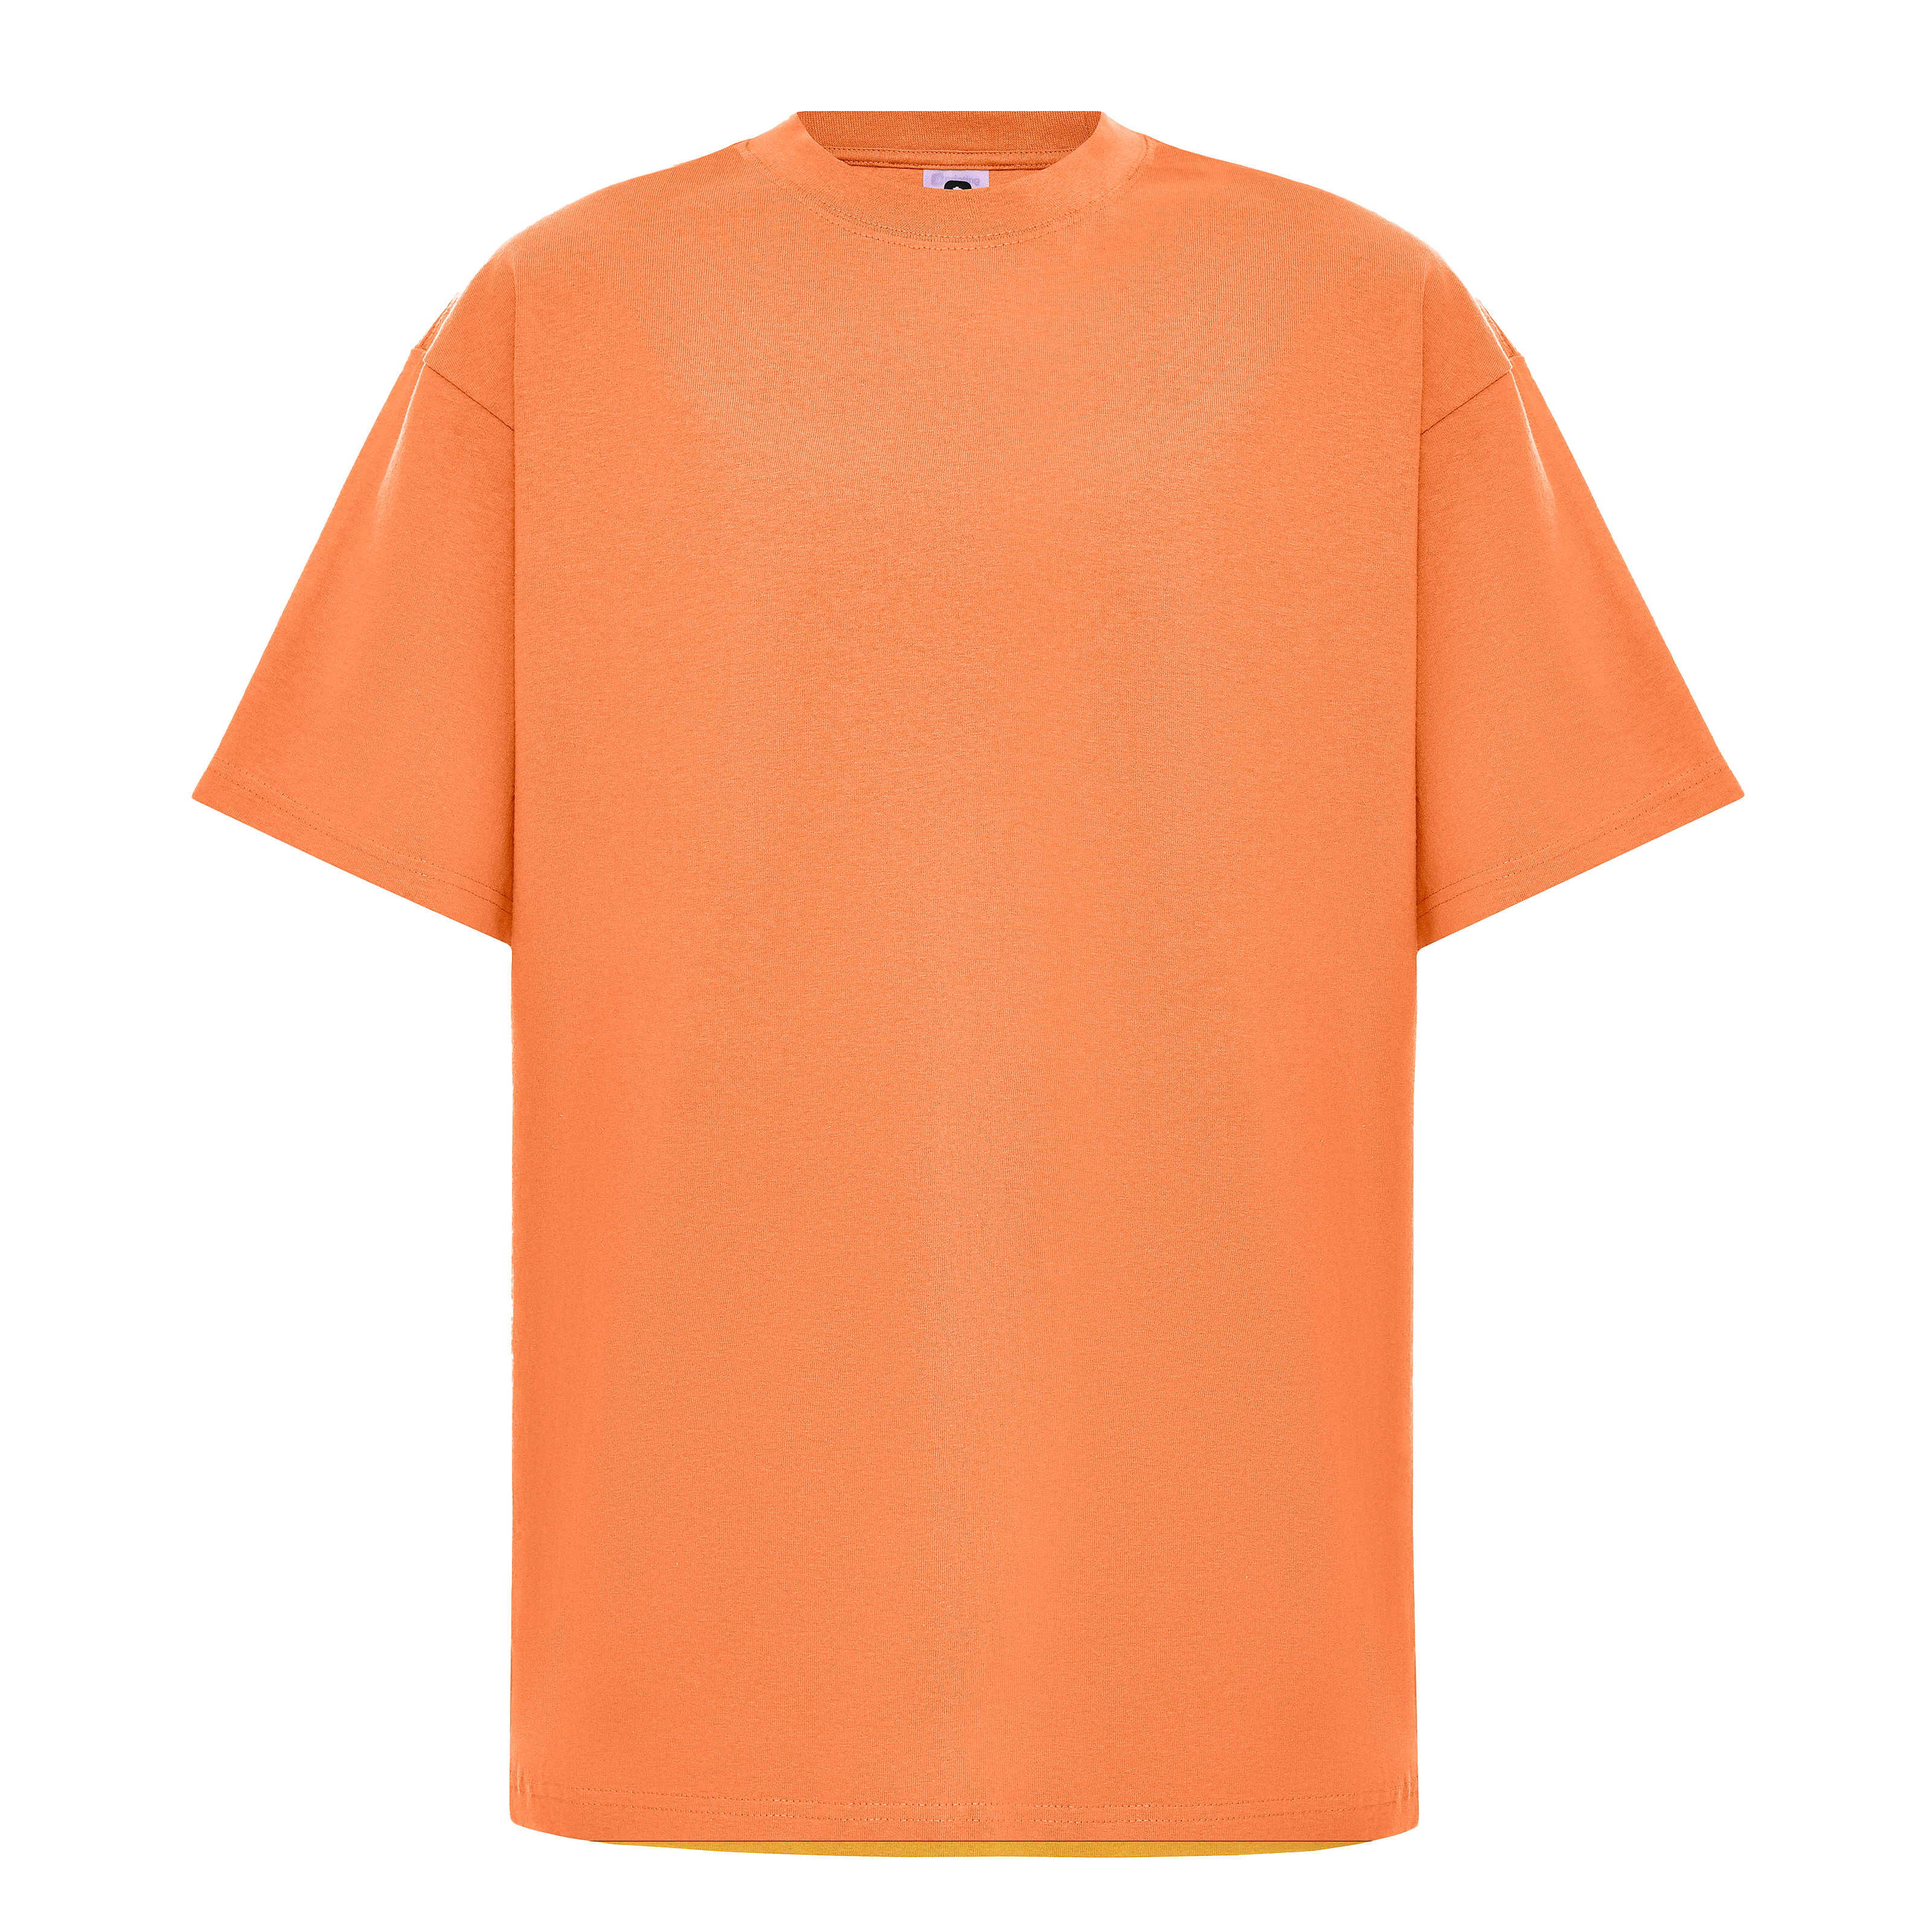 Garment Dye T-Shirt - Standard Size - Peach